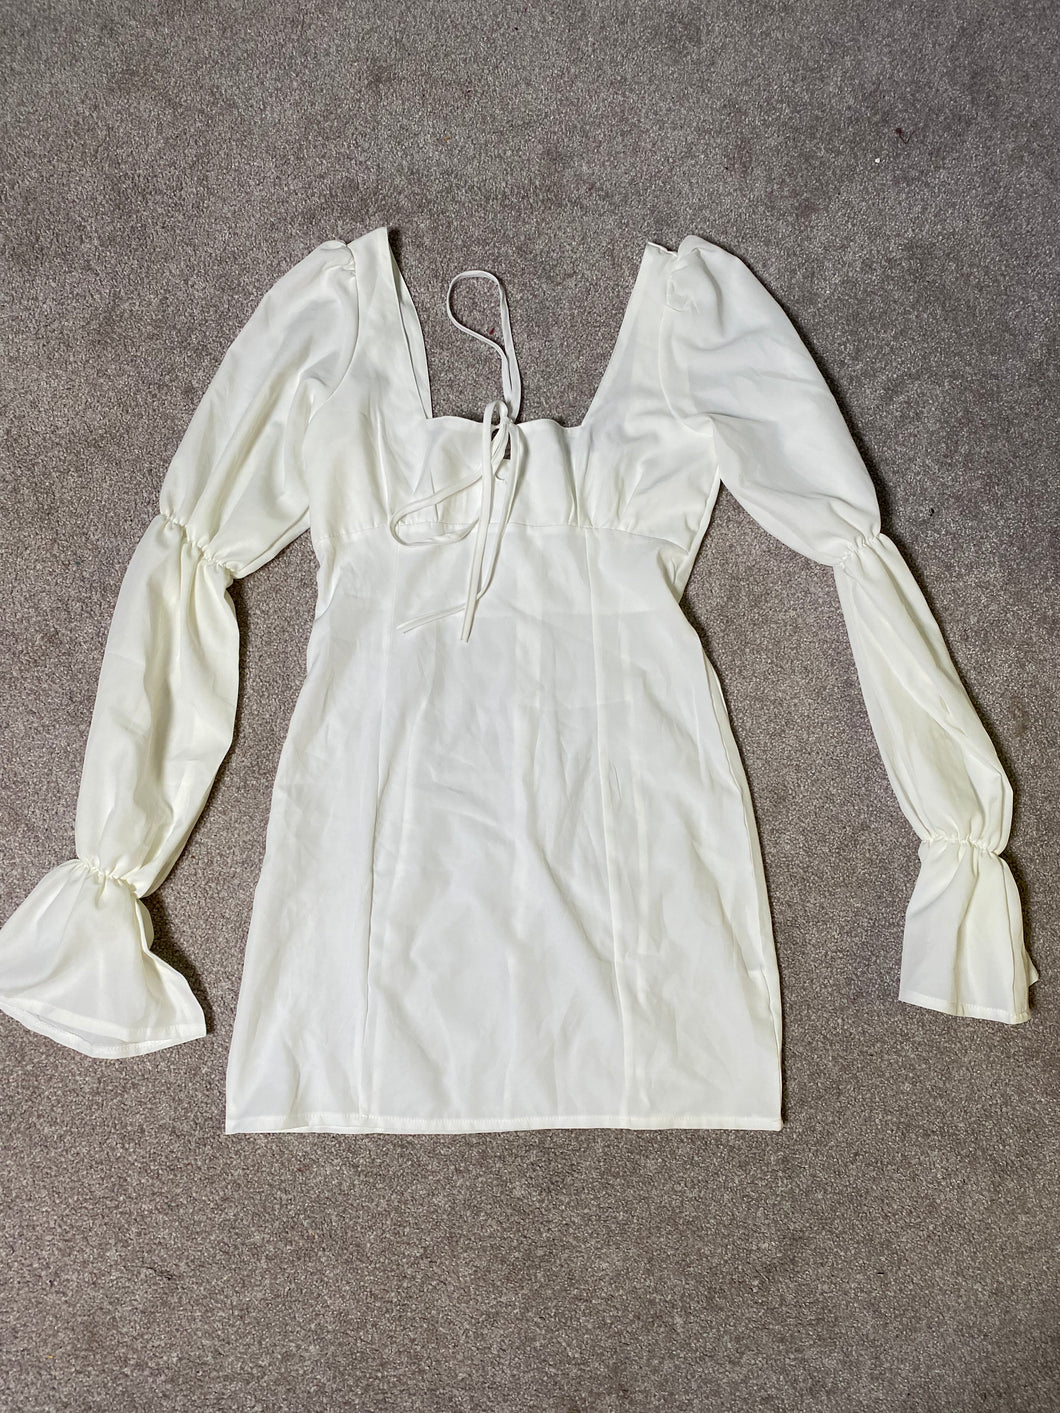 White Long Sleeve Dress - Small